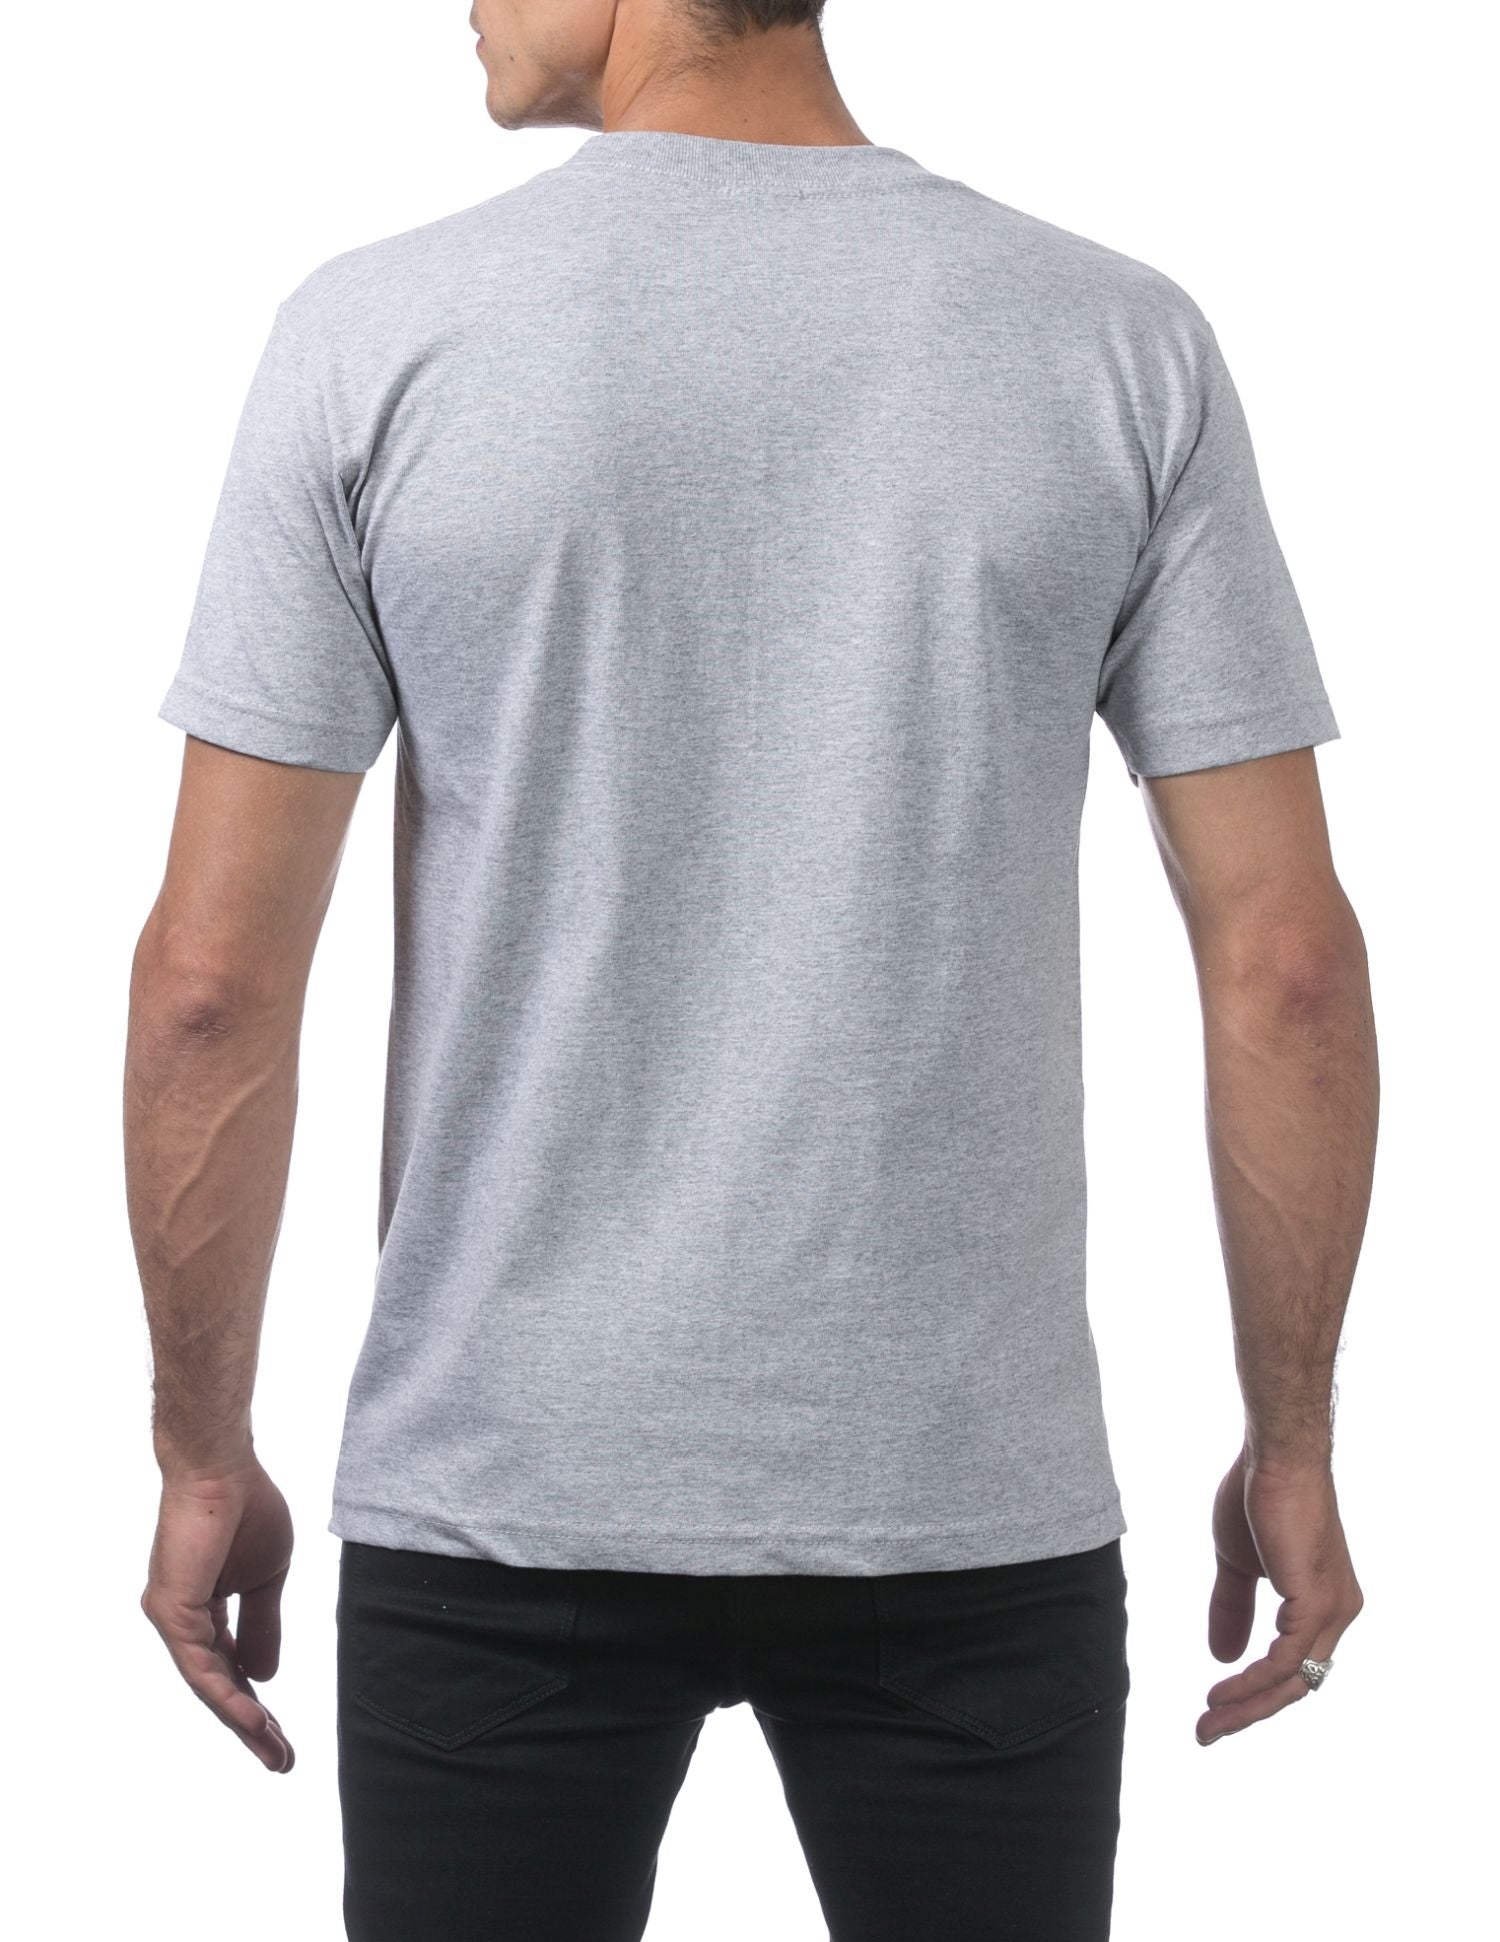 Pro Club Men's Comfort Cotton Short Sleeve T-Shirt - Heather Gray - Small - Pro-Distributing